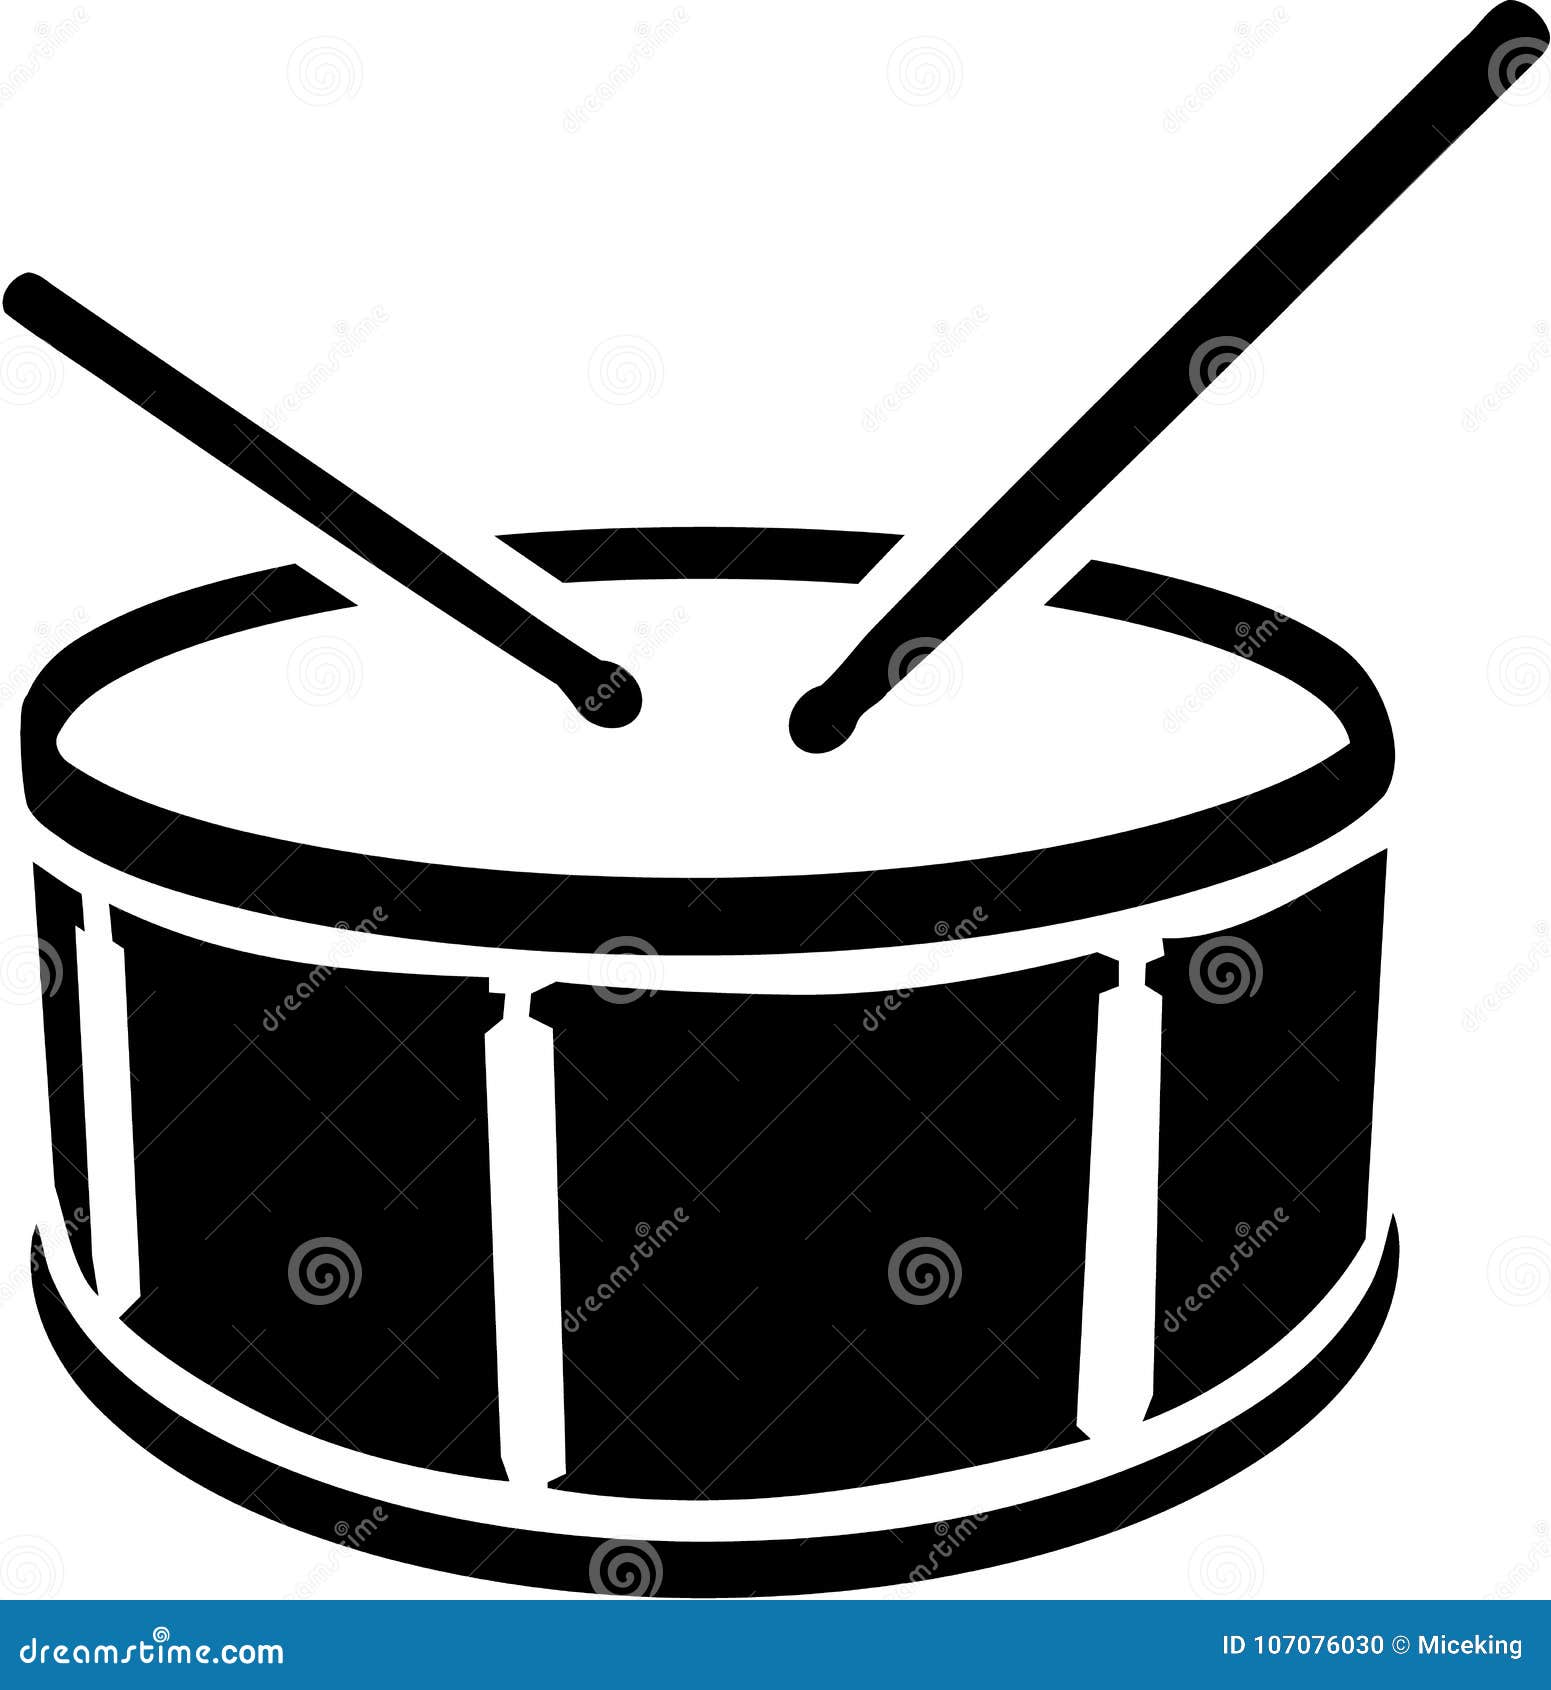 drum  with sticks